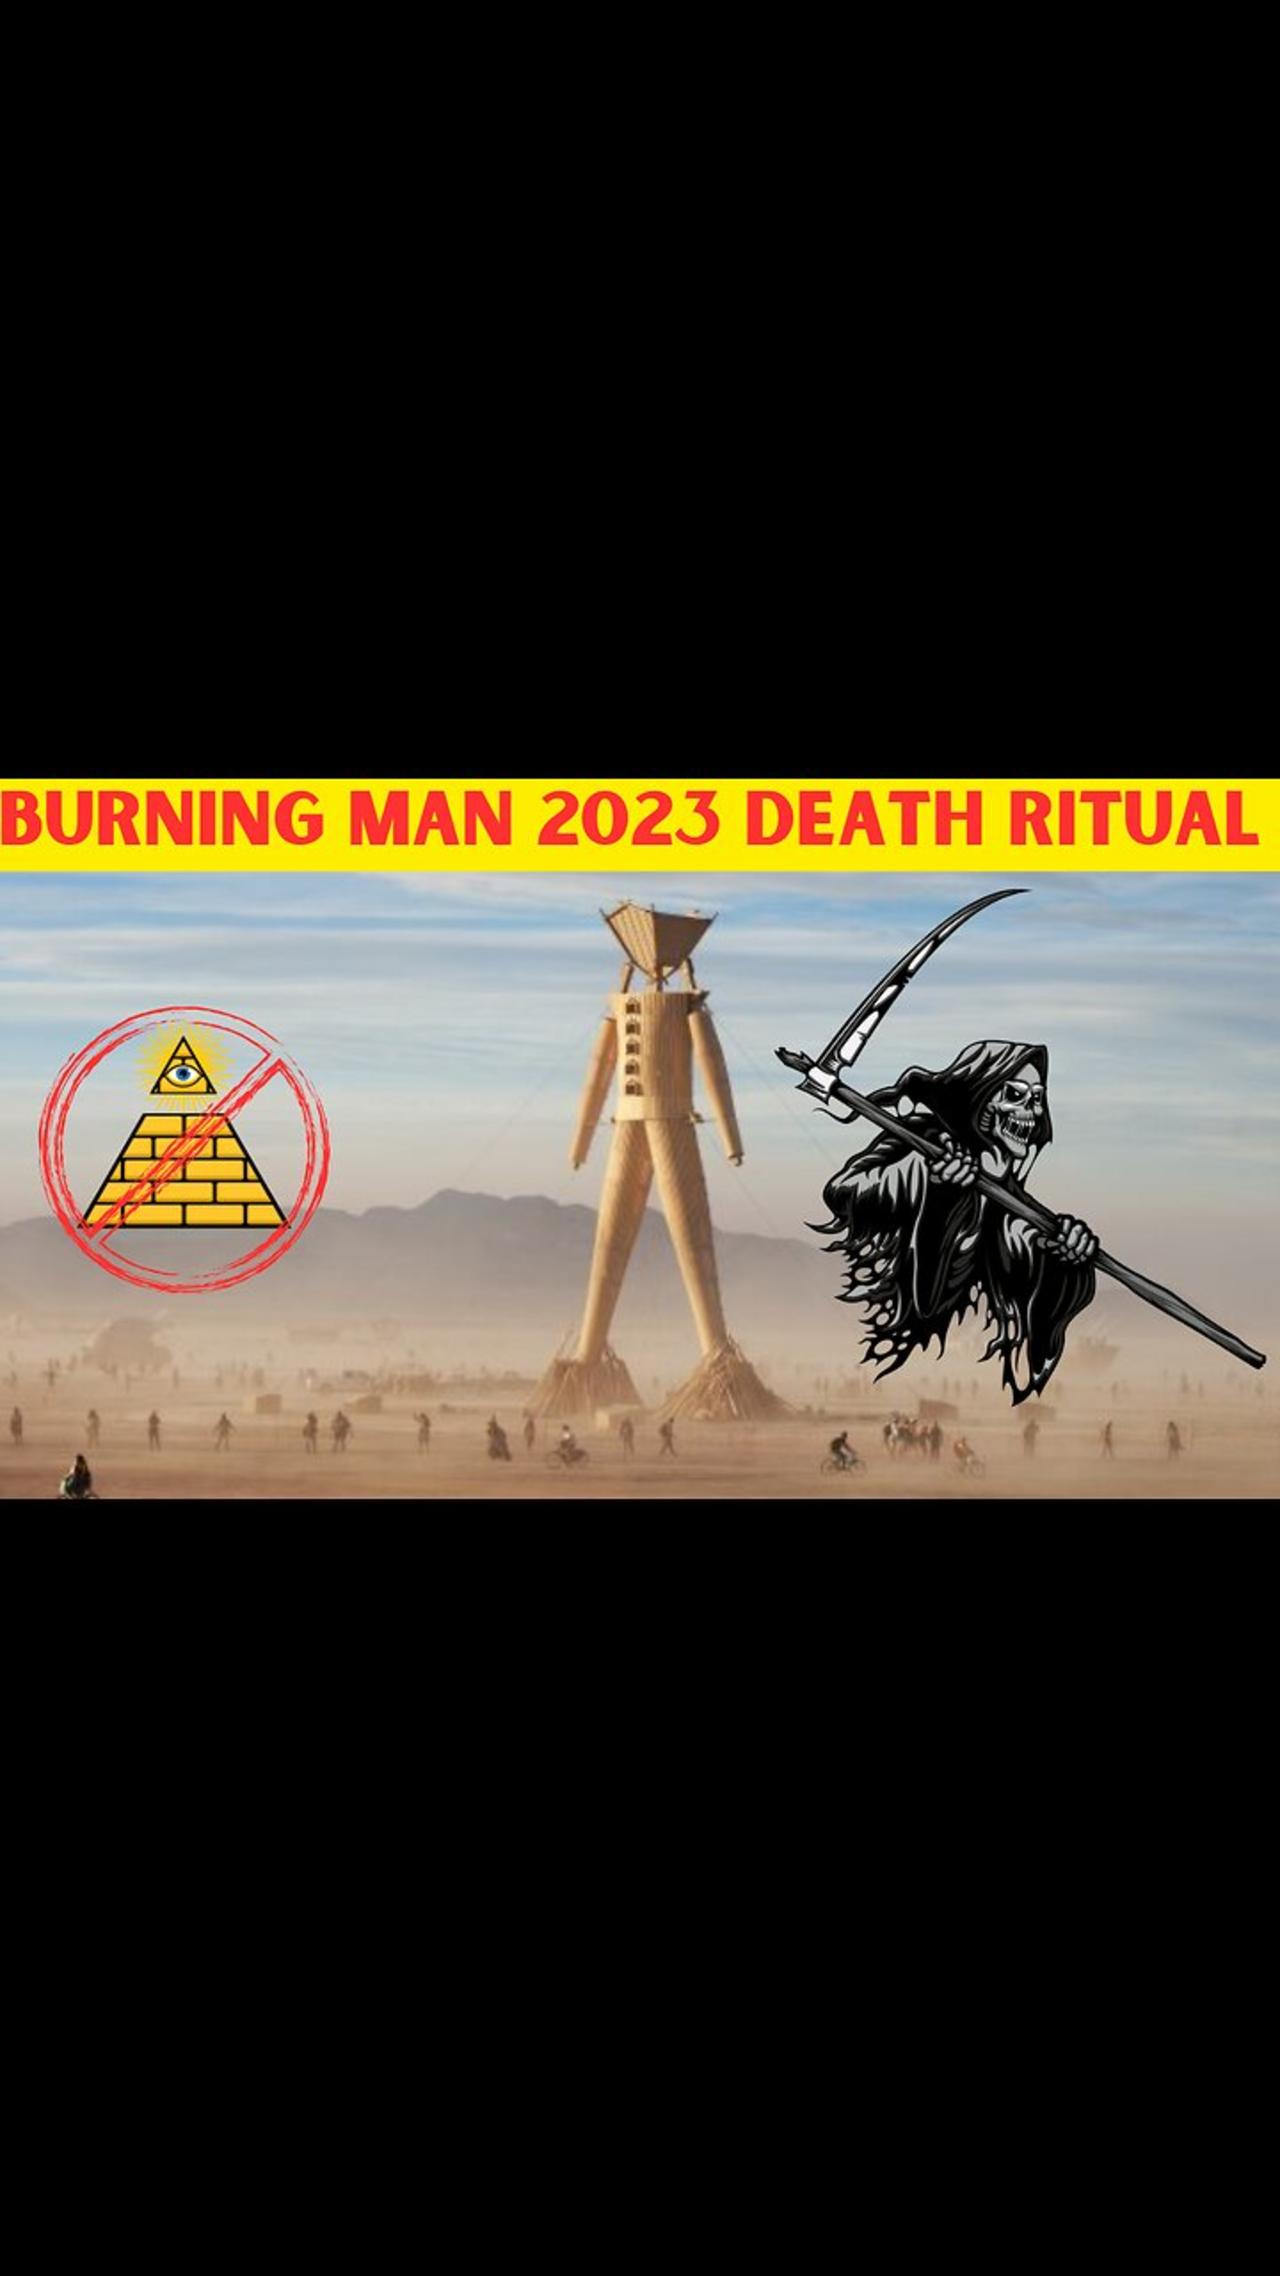 "Bloody Outbreak at Burning Man: Fears of Ebola Return Amid Alarming Symptoms"